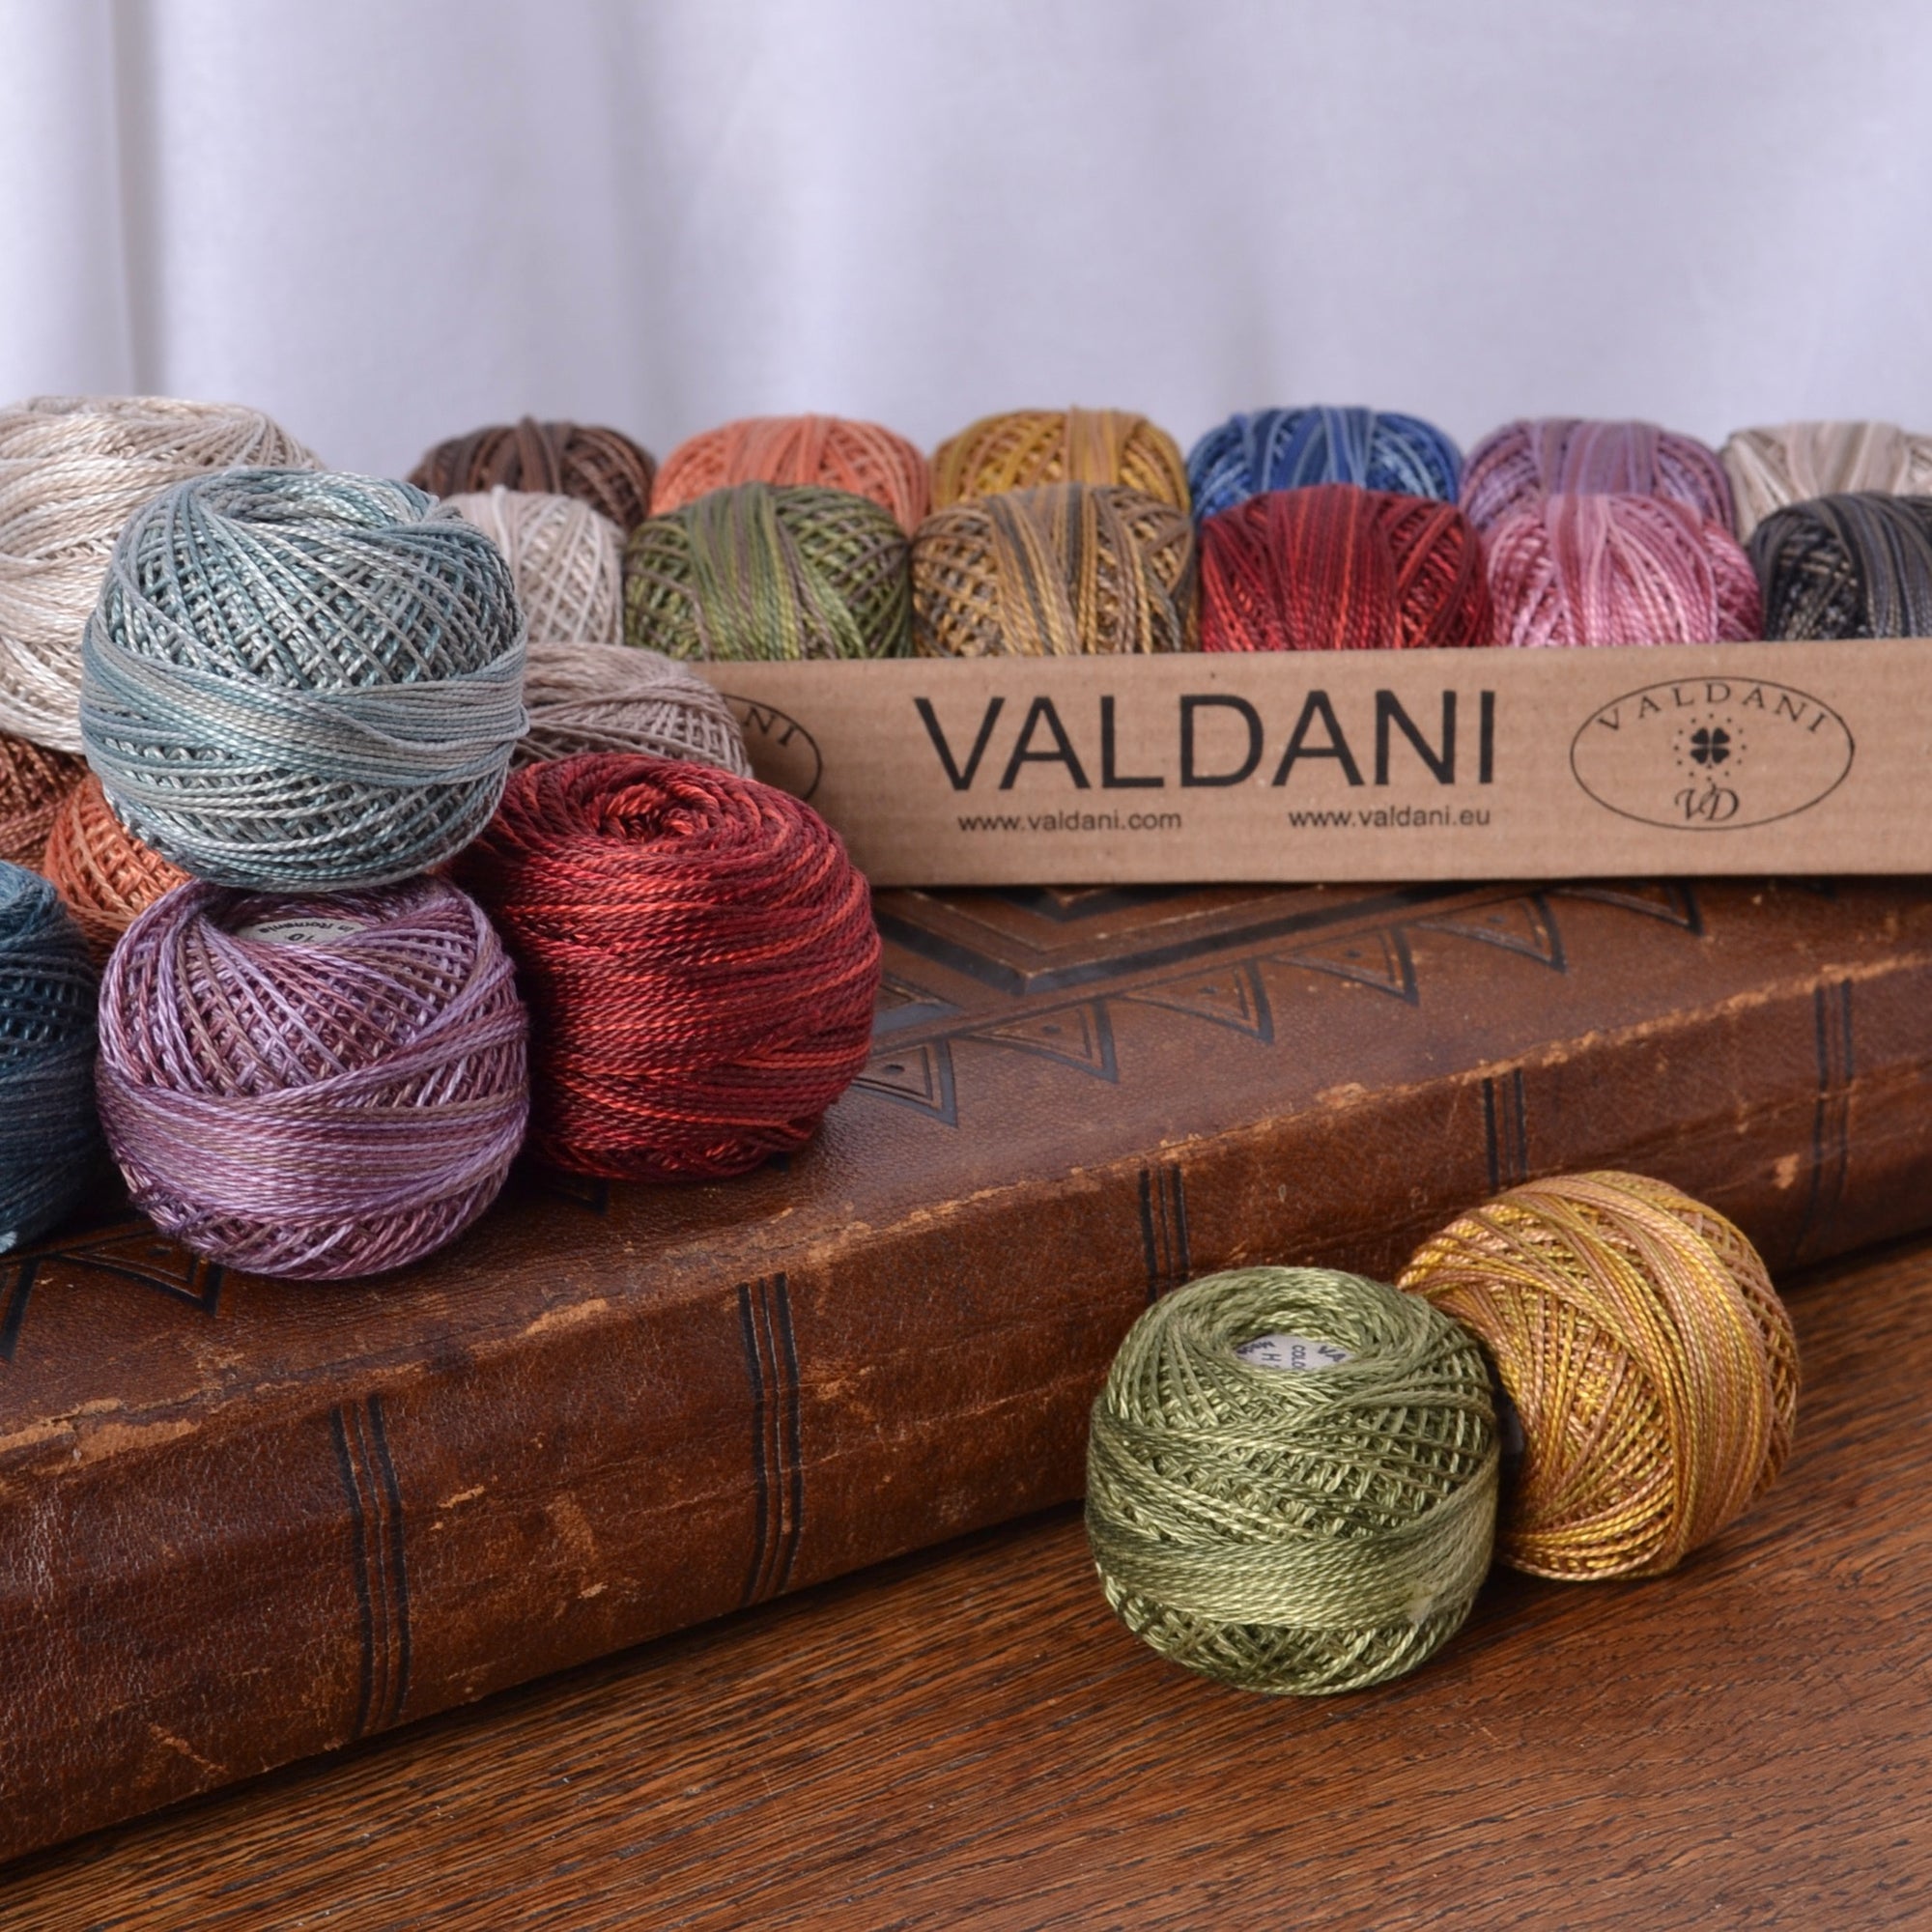 Valdani cotton thread for hand stitching